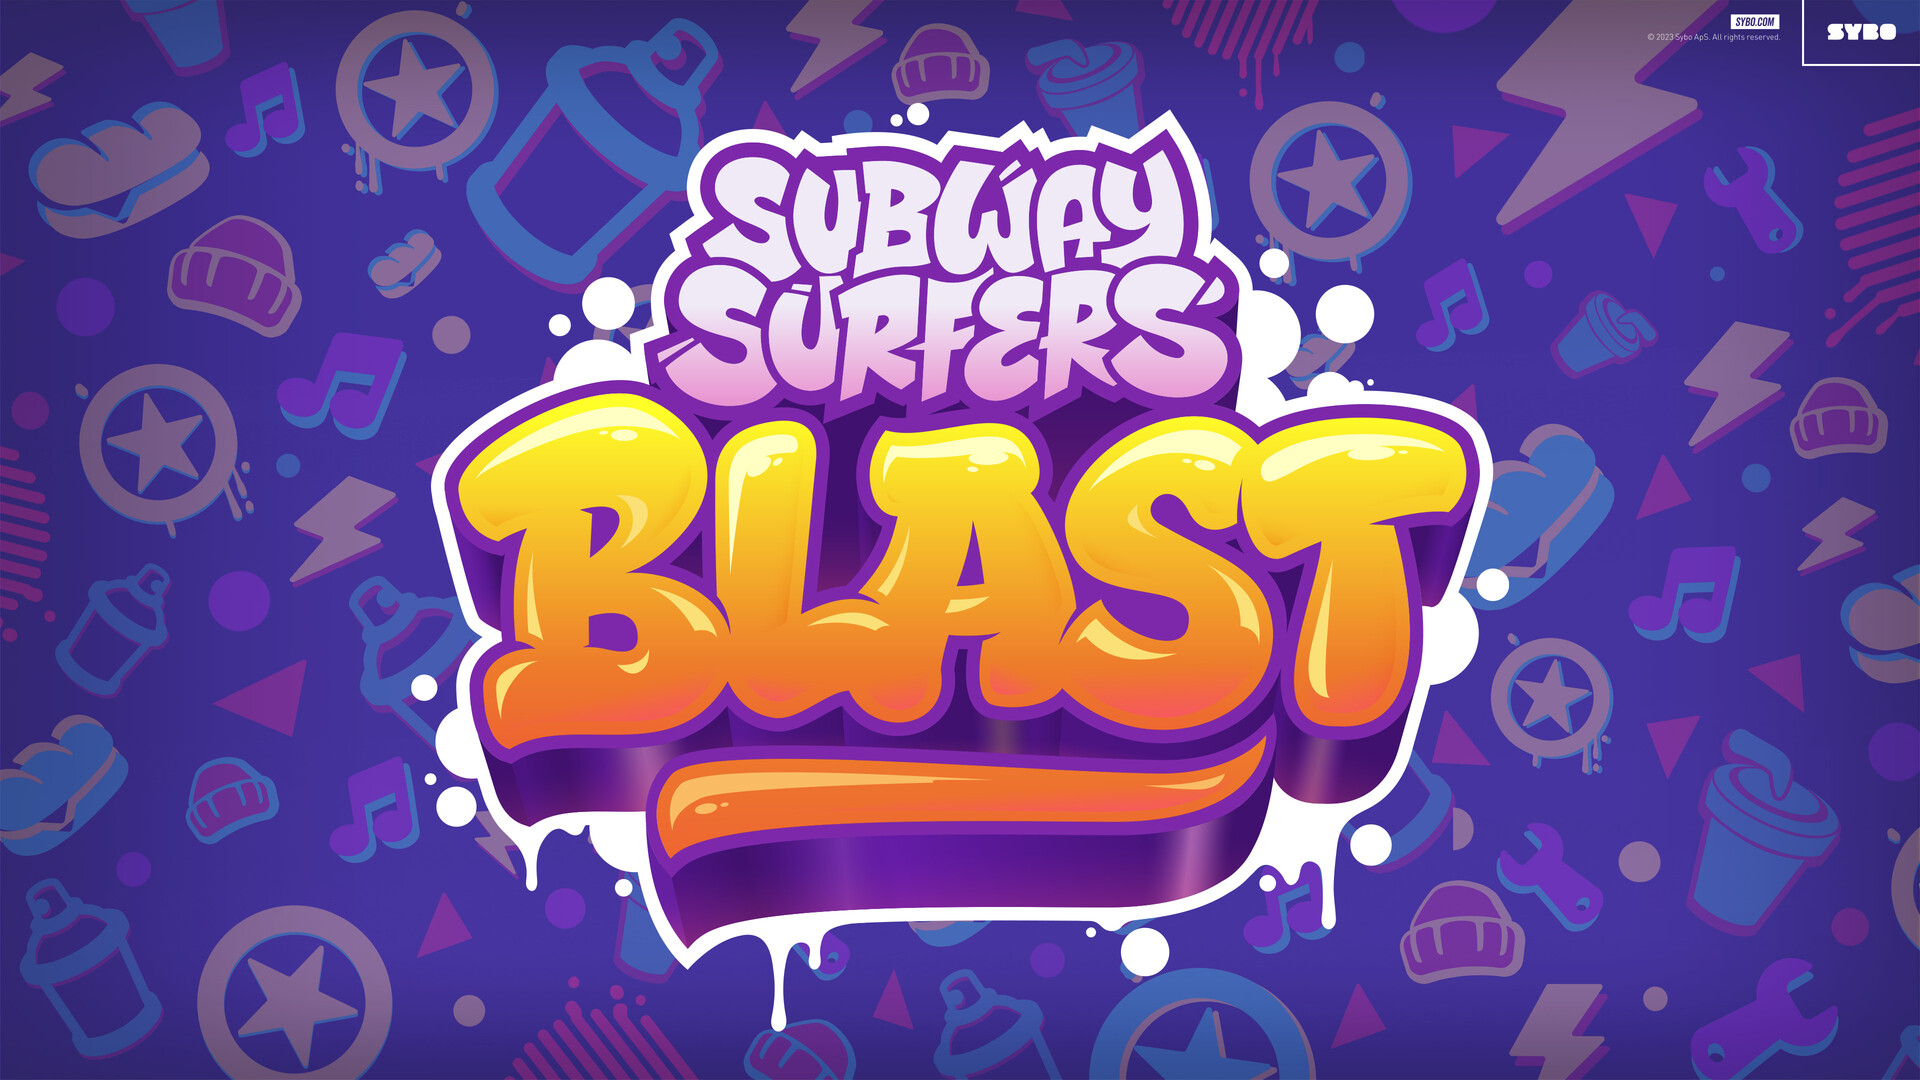 Subway Surfers Blast Official Trailer 